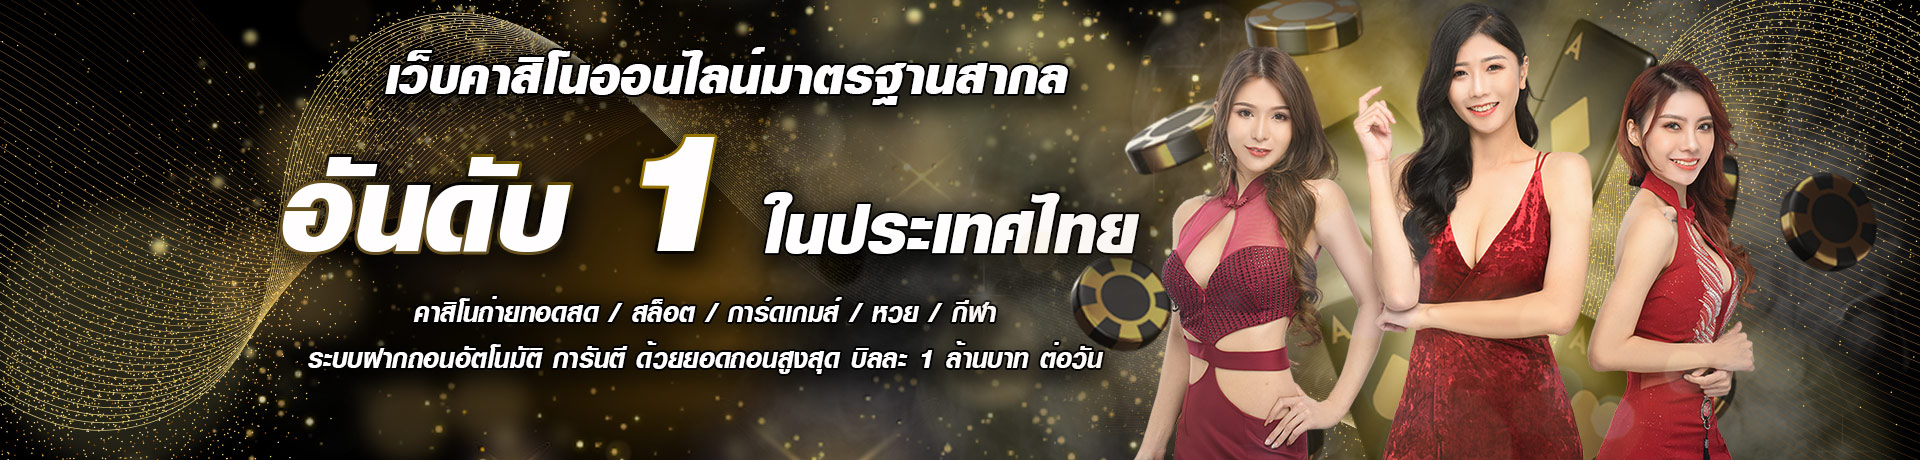 cup1688 เว็บพนันออนไลน์ สล็อตออนไลน์ คาสิโนสด บาคาร่า หวยไทย